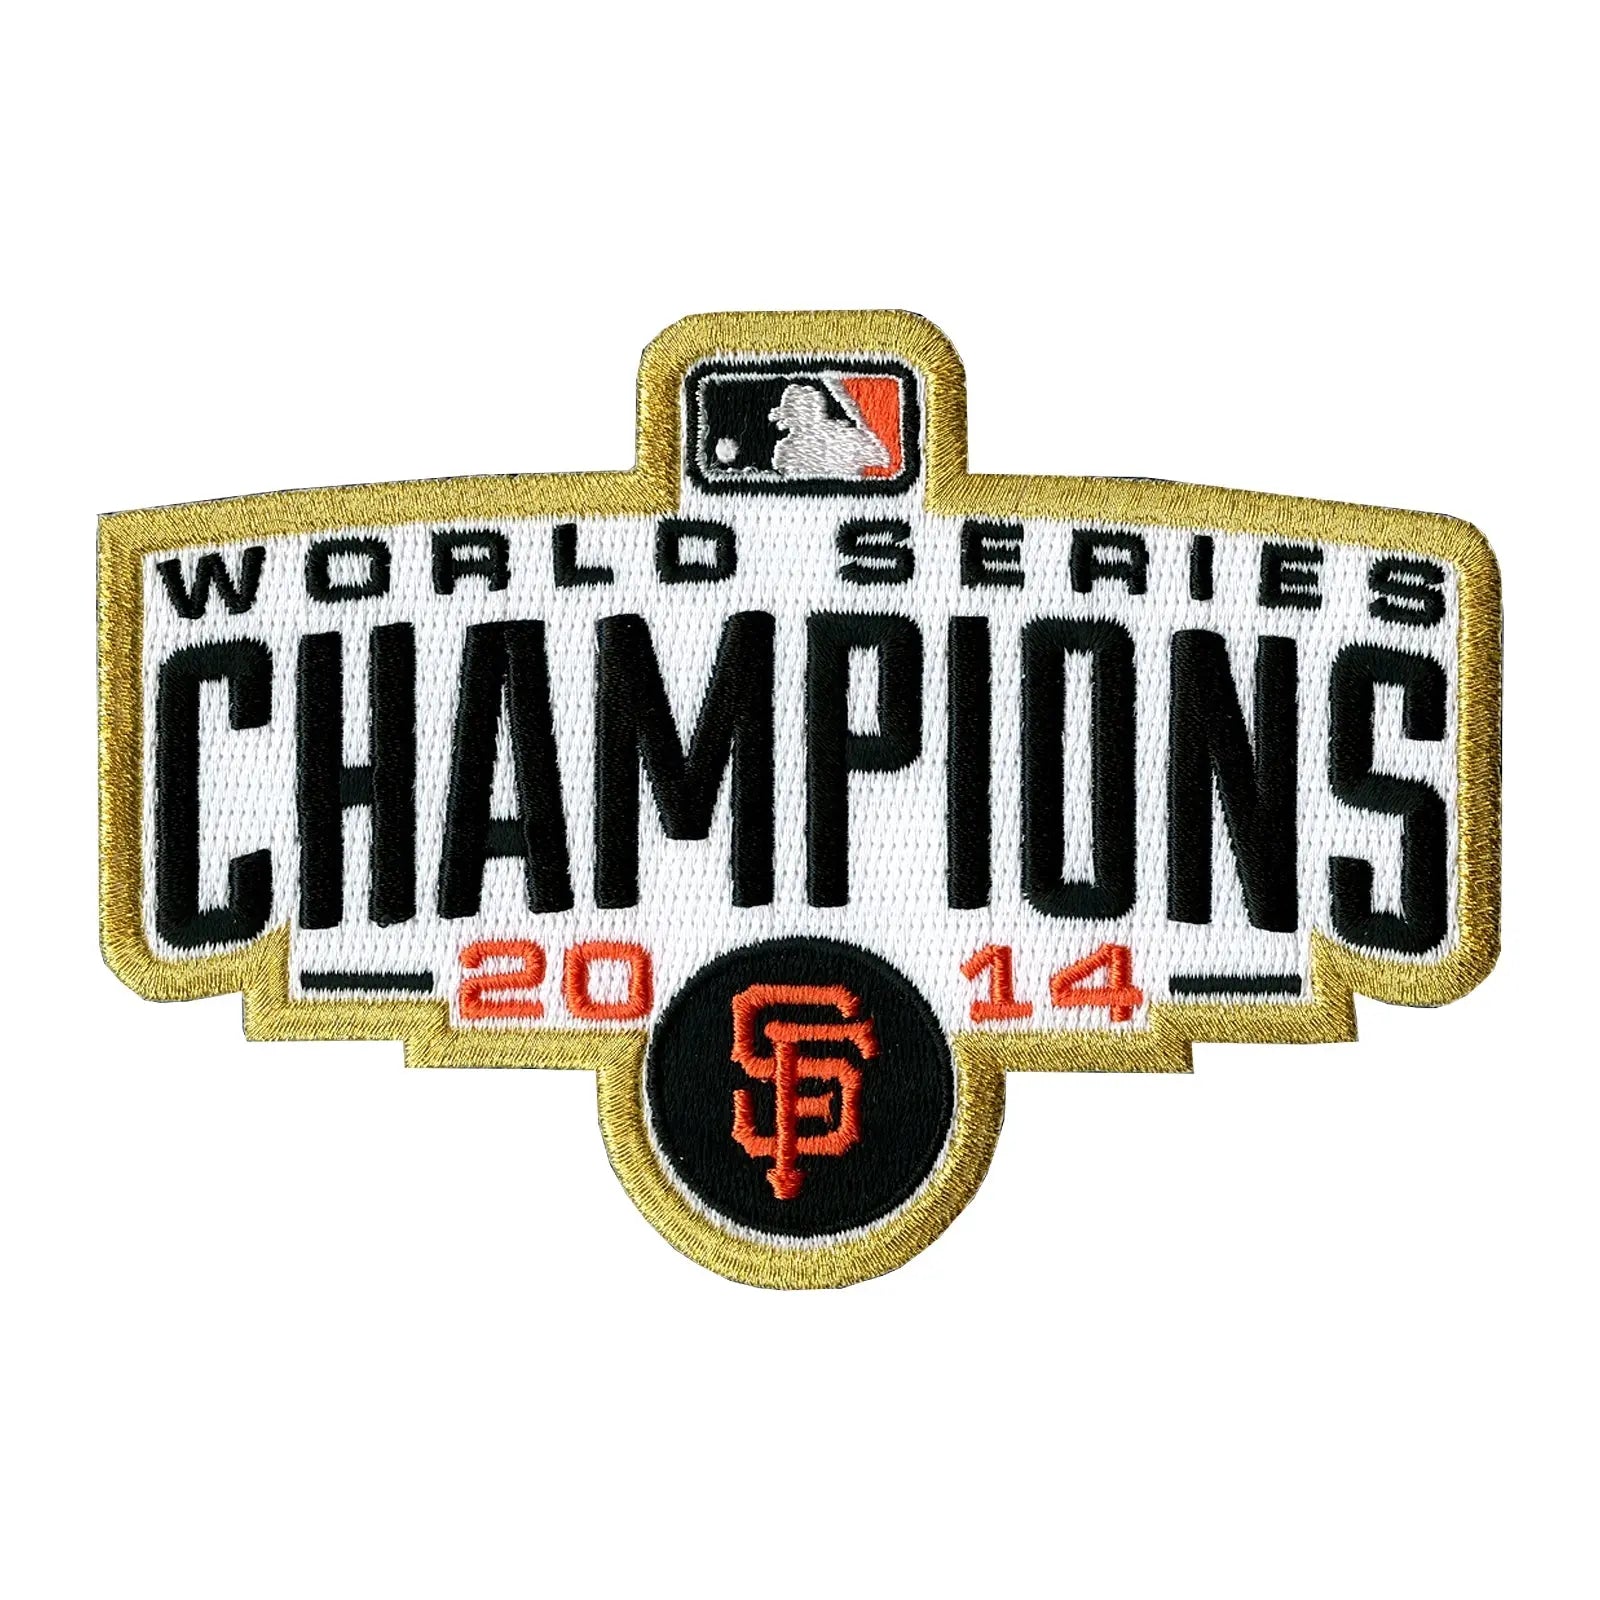 2012 San Francisco Giants World Series Championship Ring.